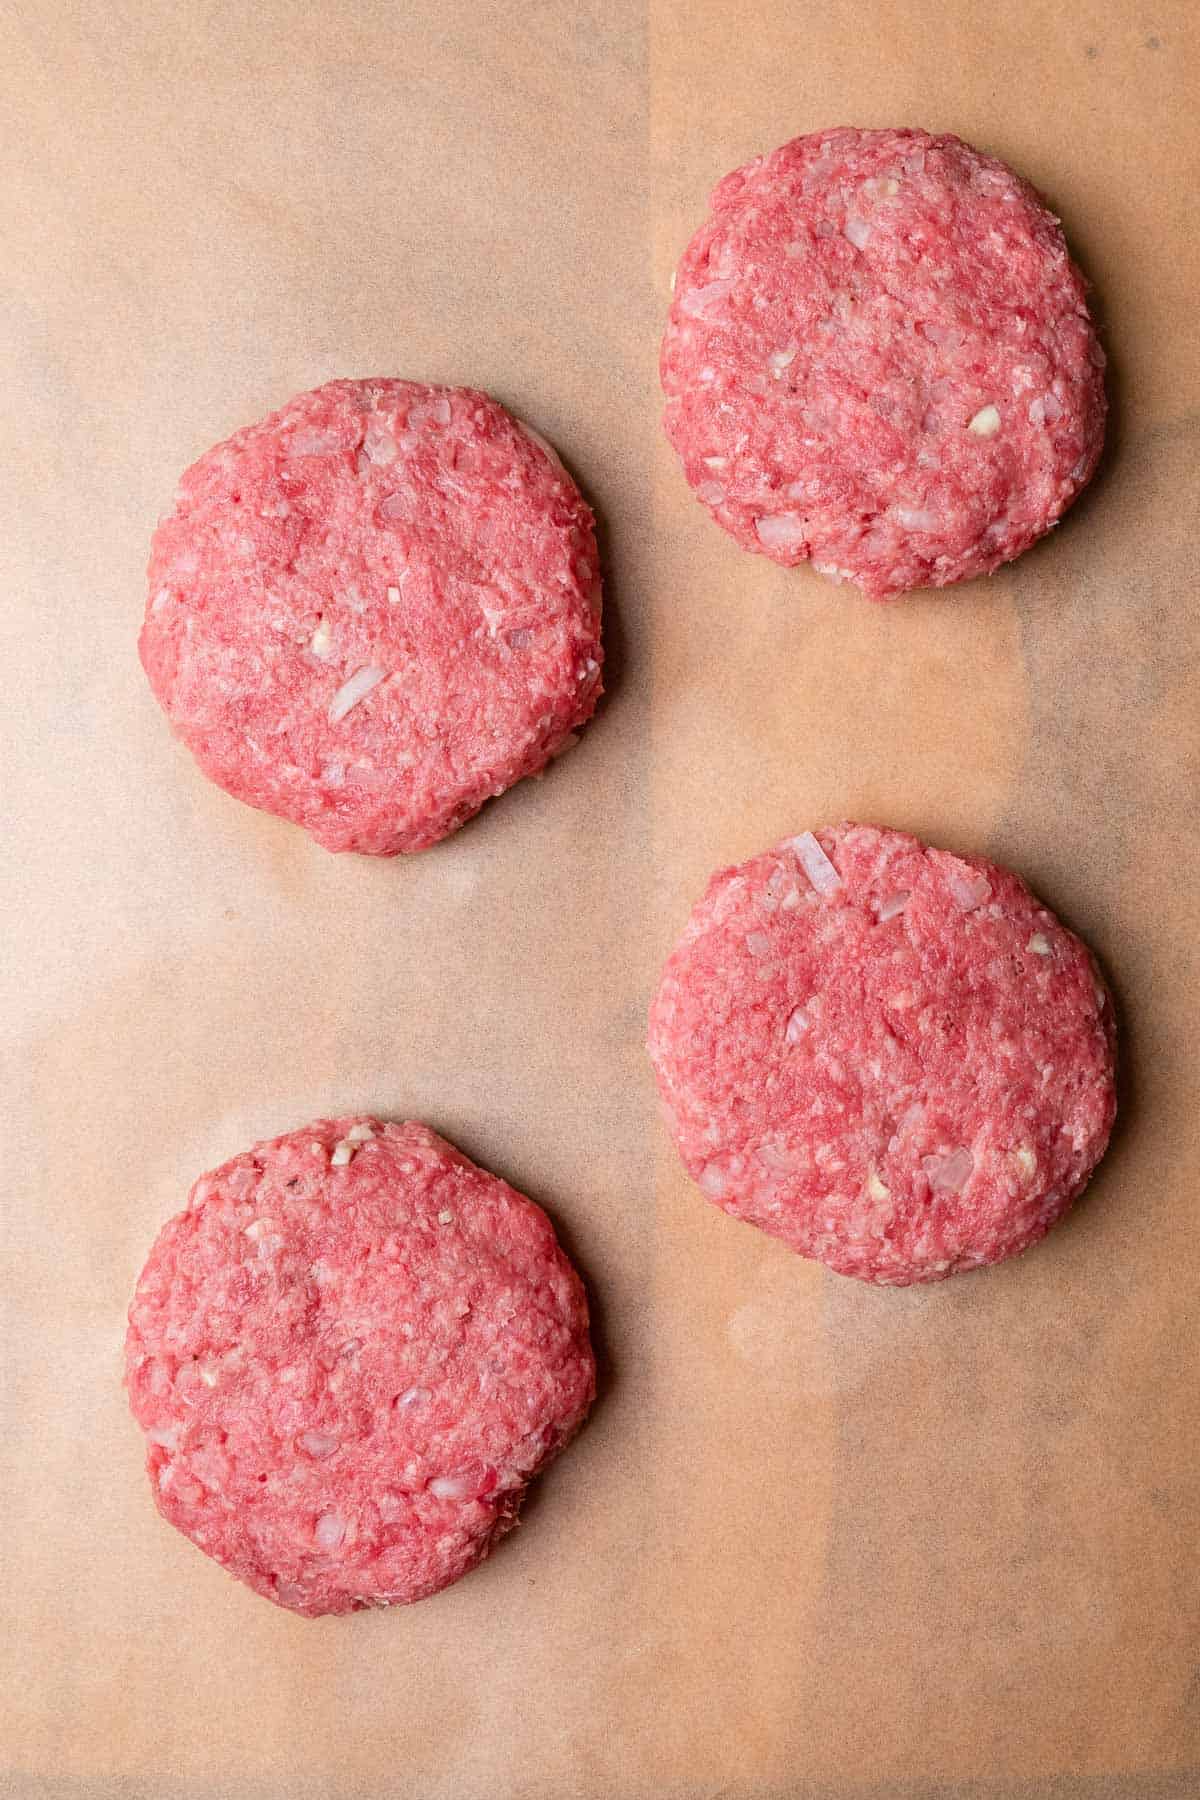 four formed hamburger patties